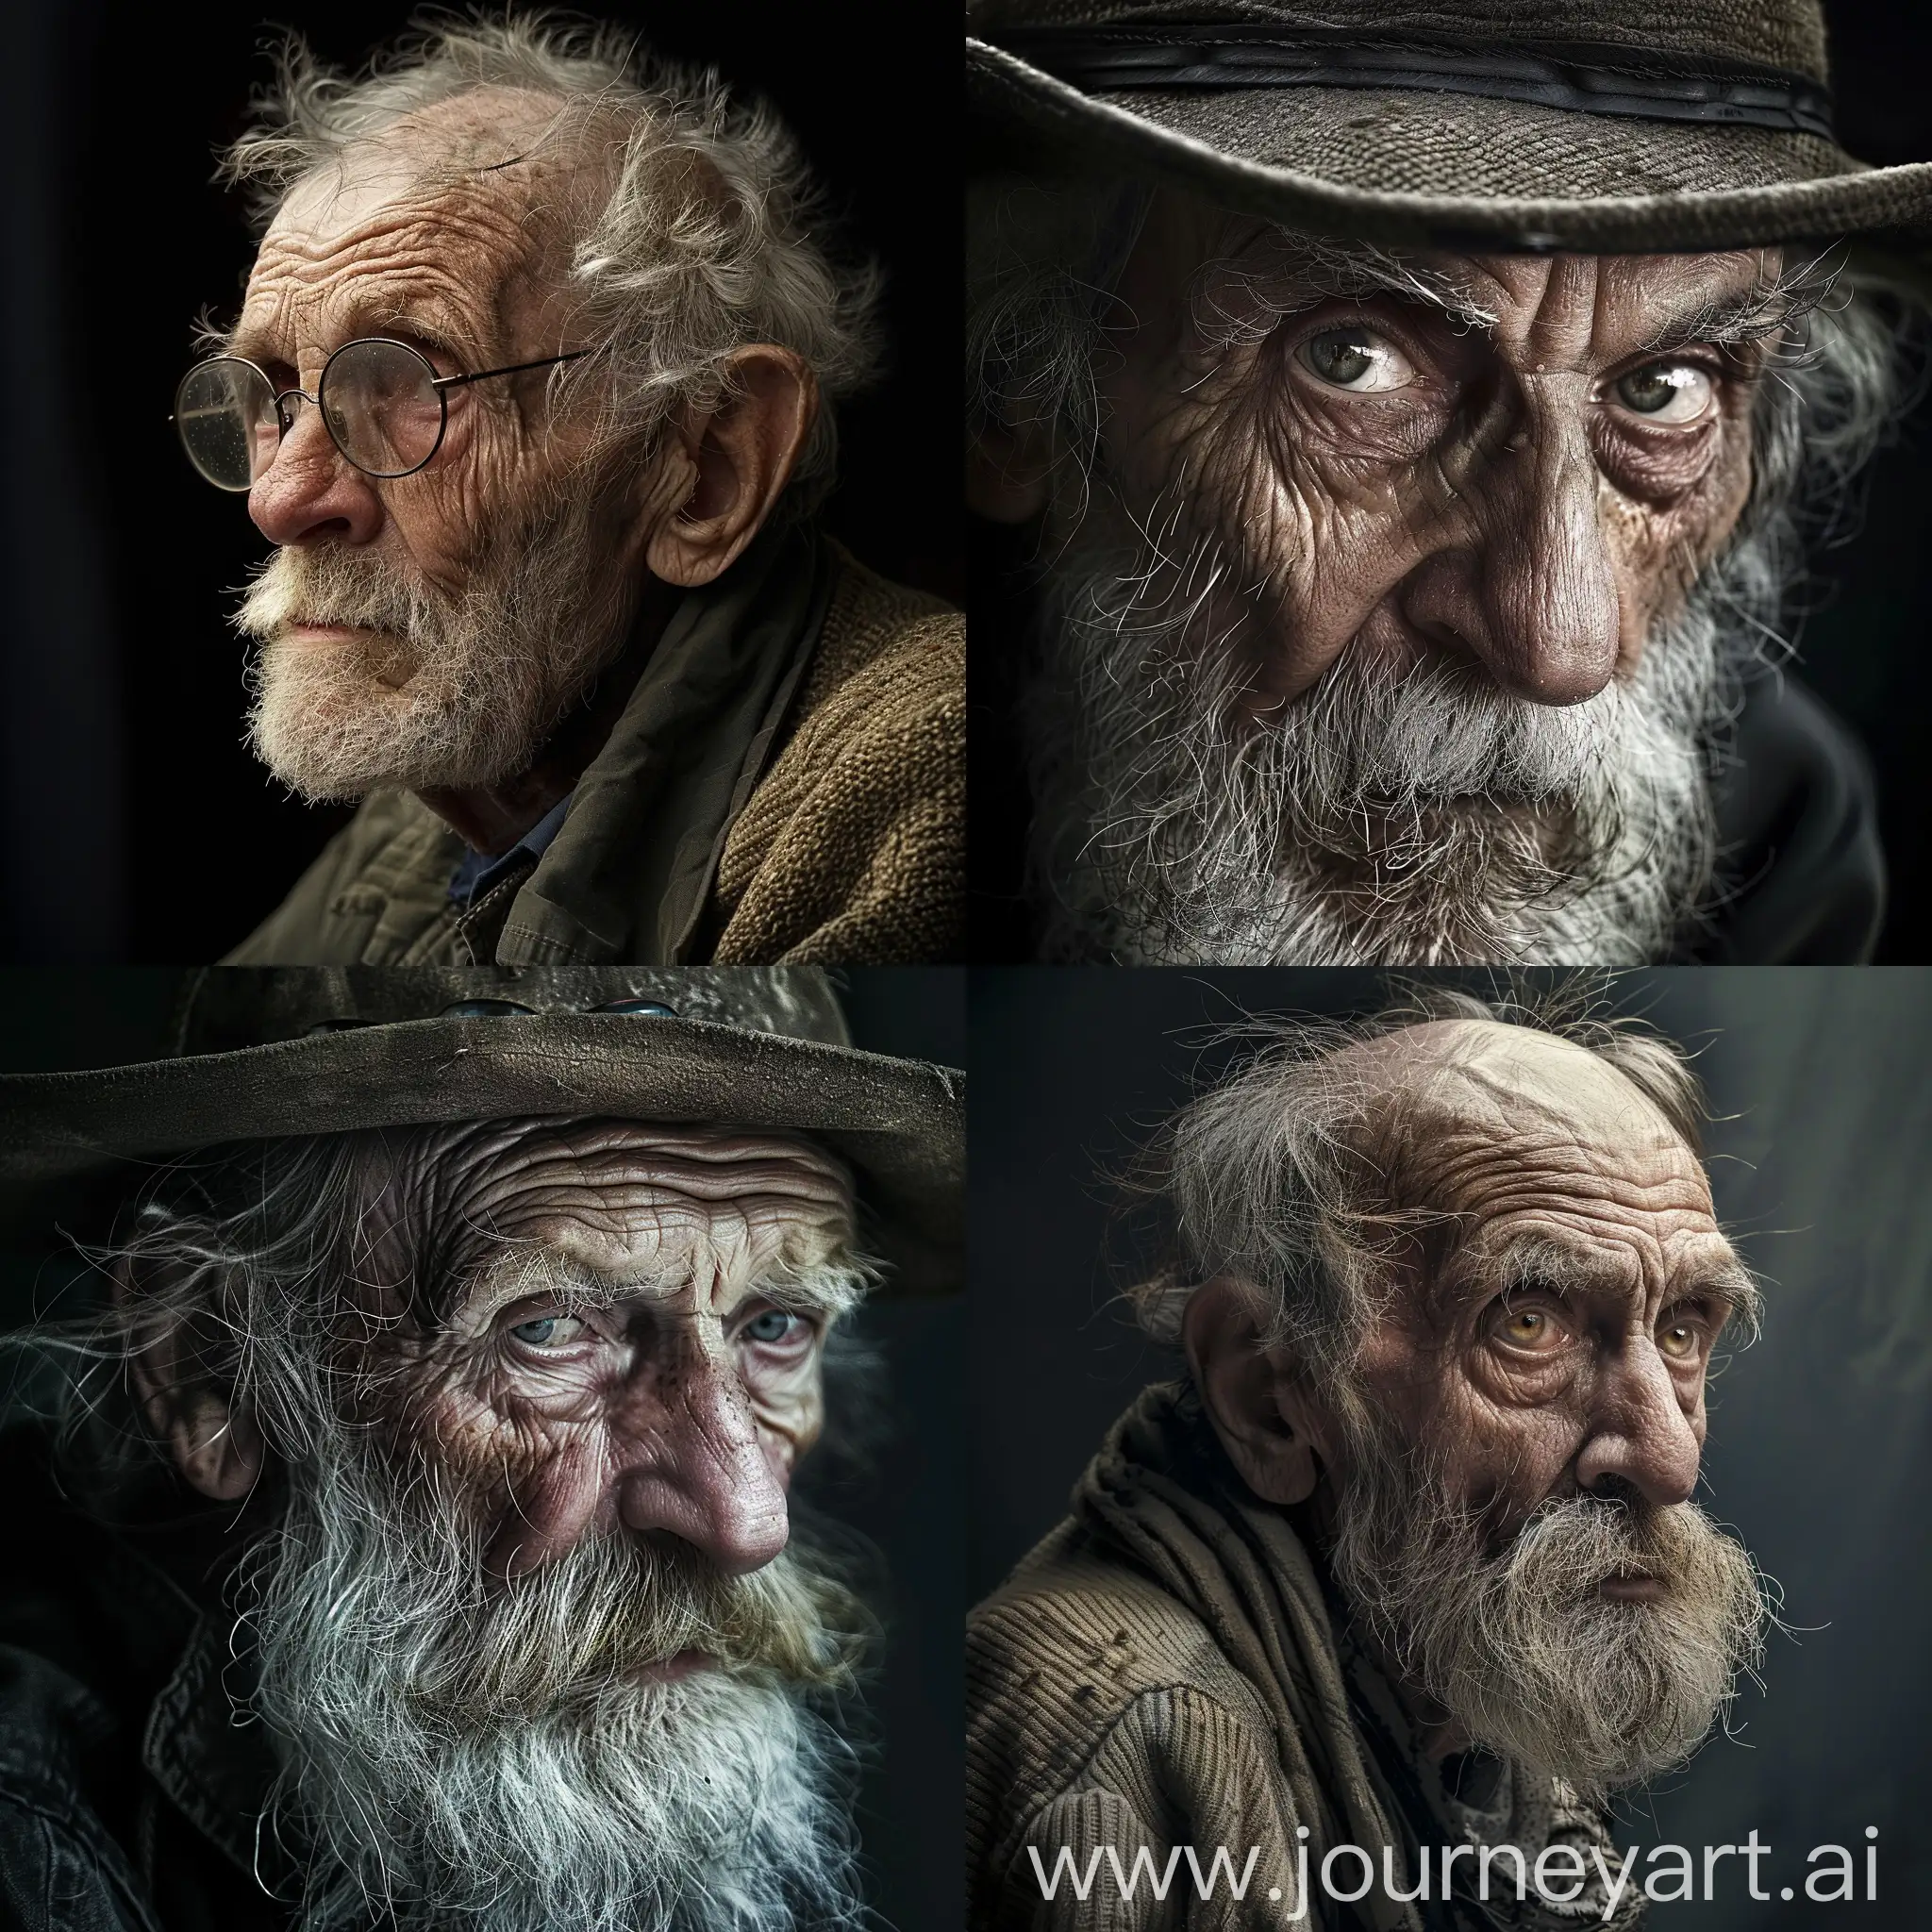 Eccentric-Old-Man-Portrait-Expressive-Profile-Photo-with-Unique-Character